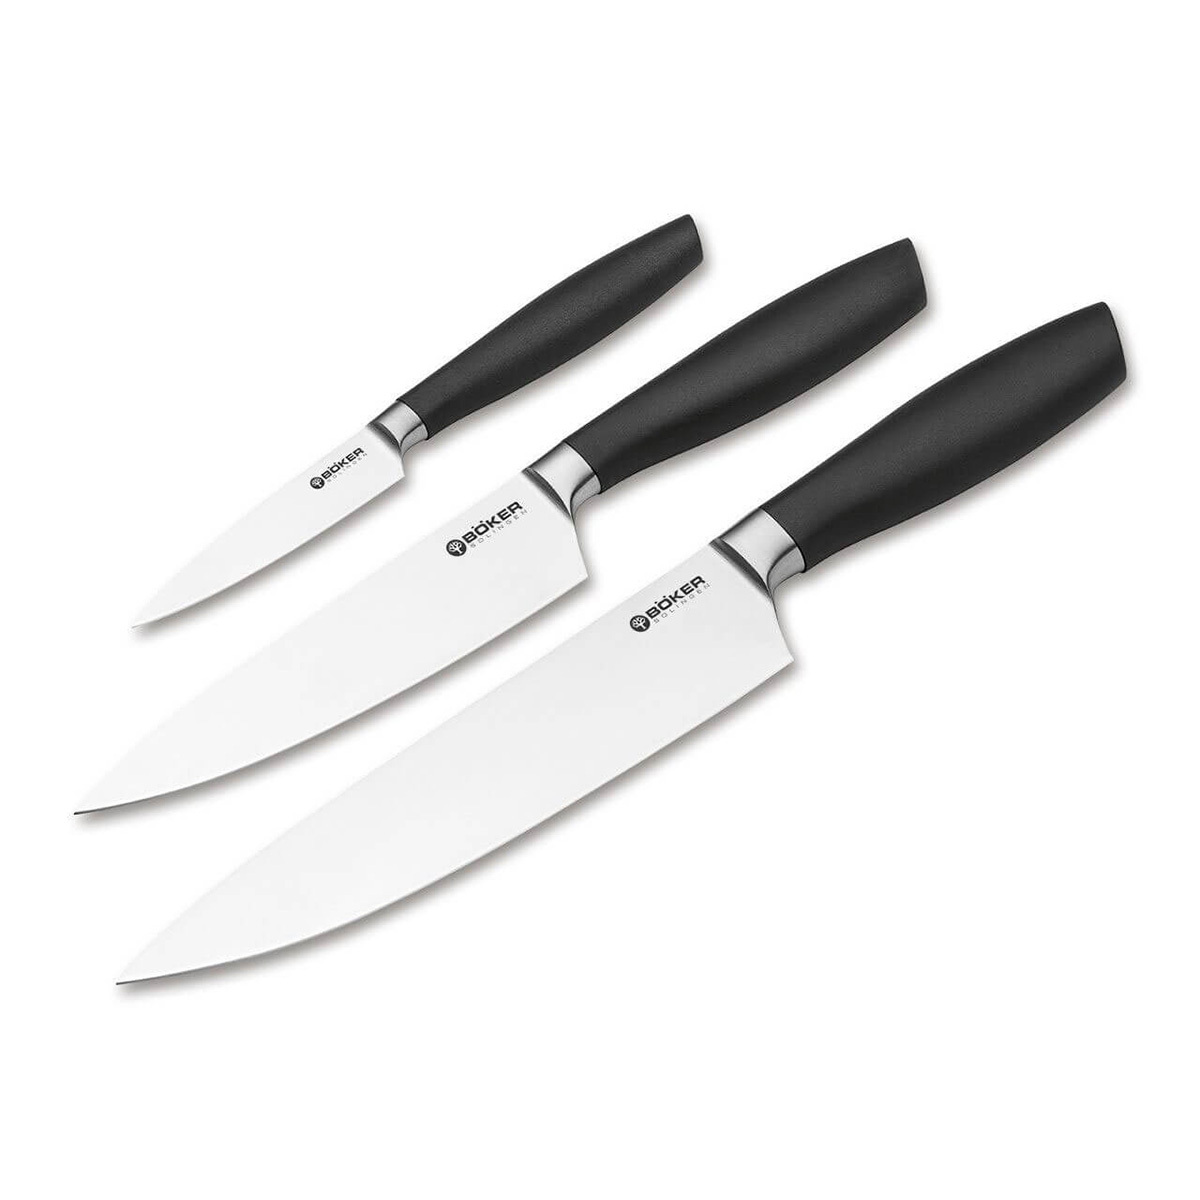 Набор кухонных ножей Boker Core Professional Set, сталь X50CrMoV15, рукоять synthetic